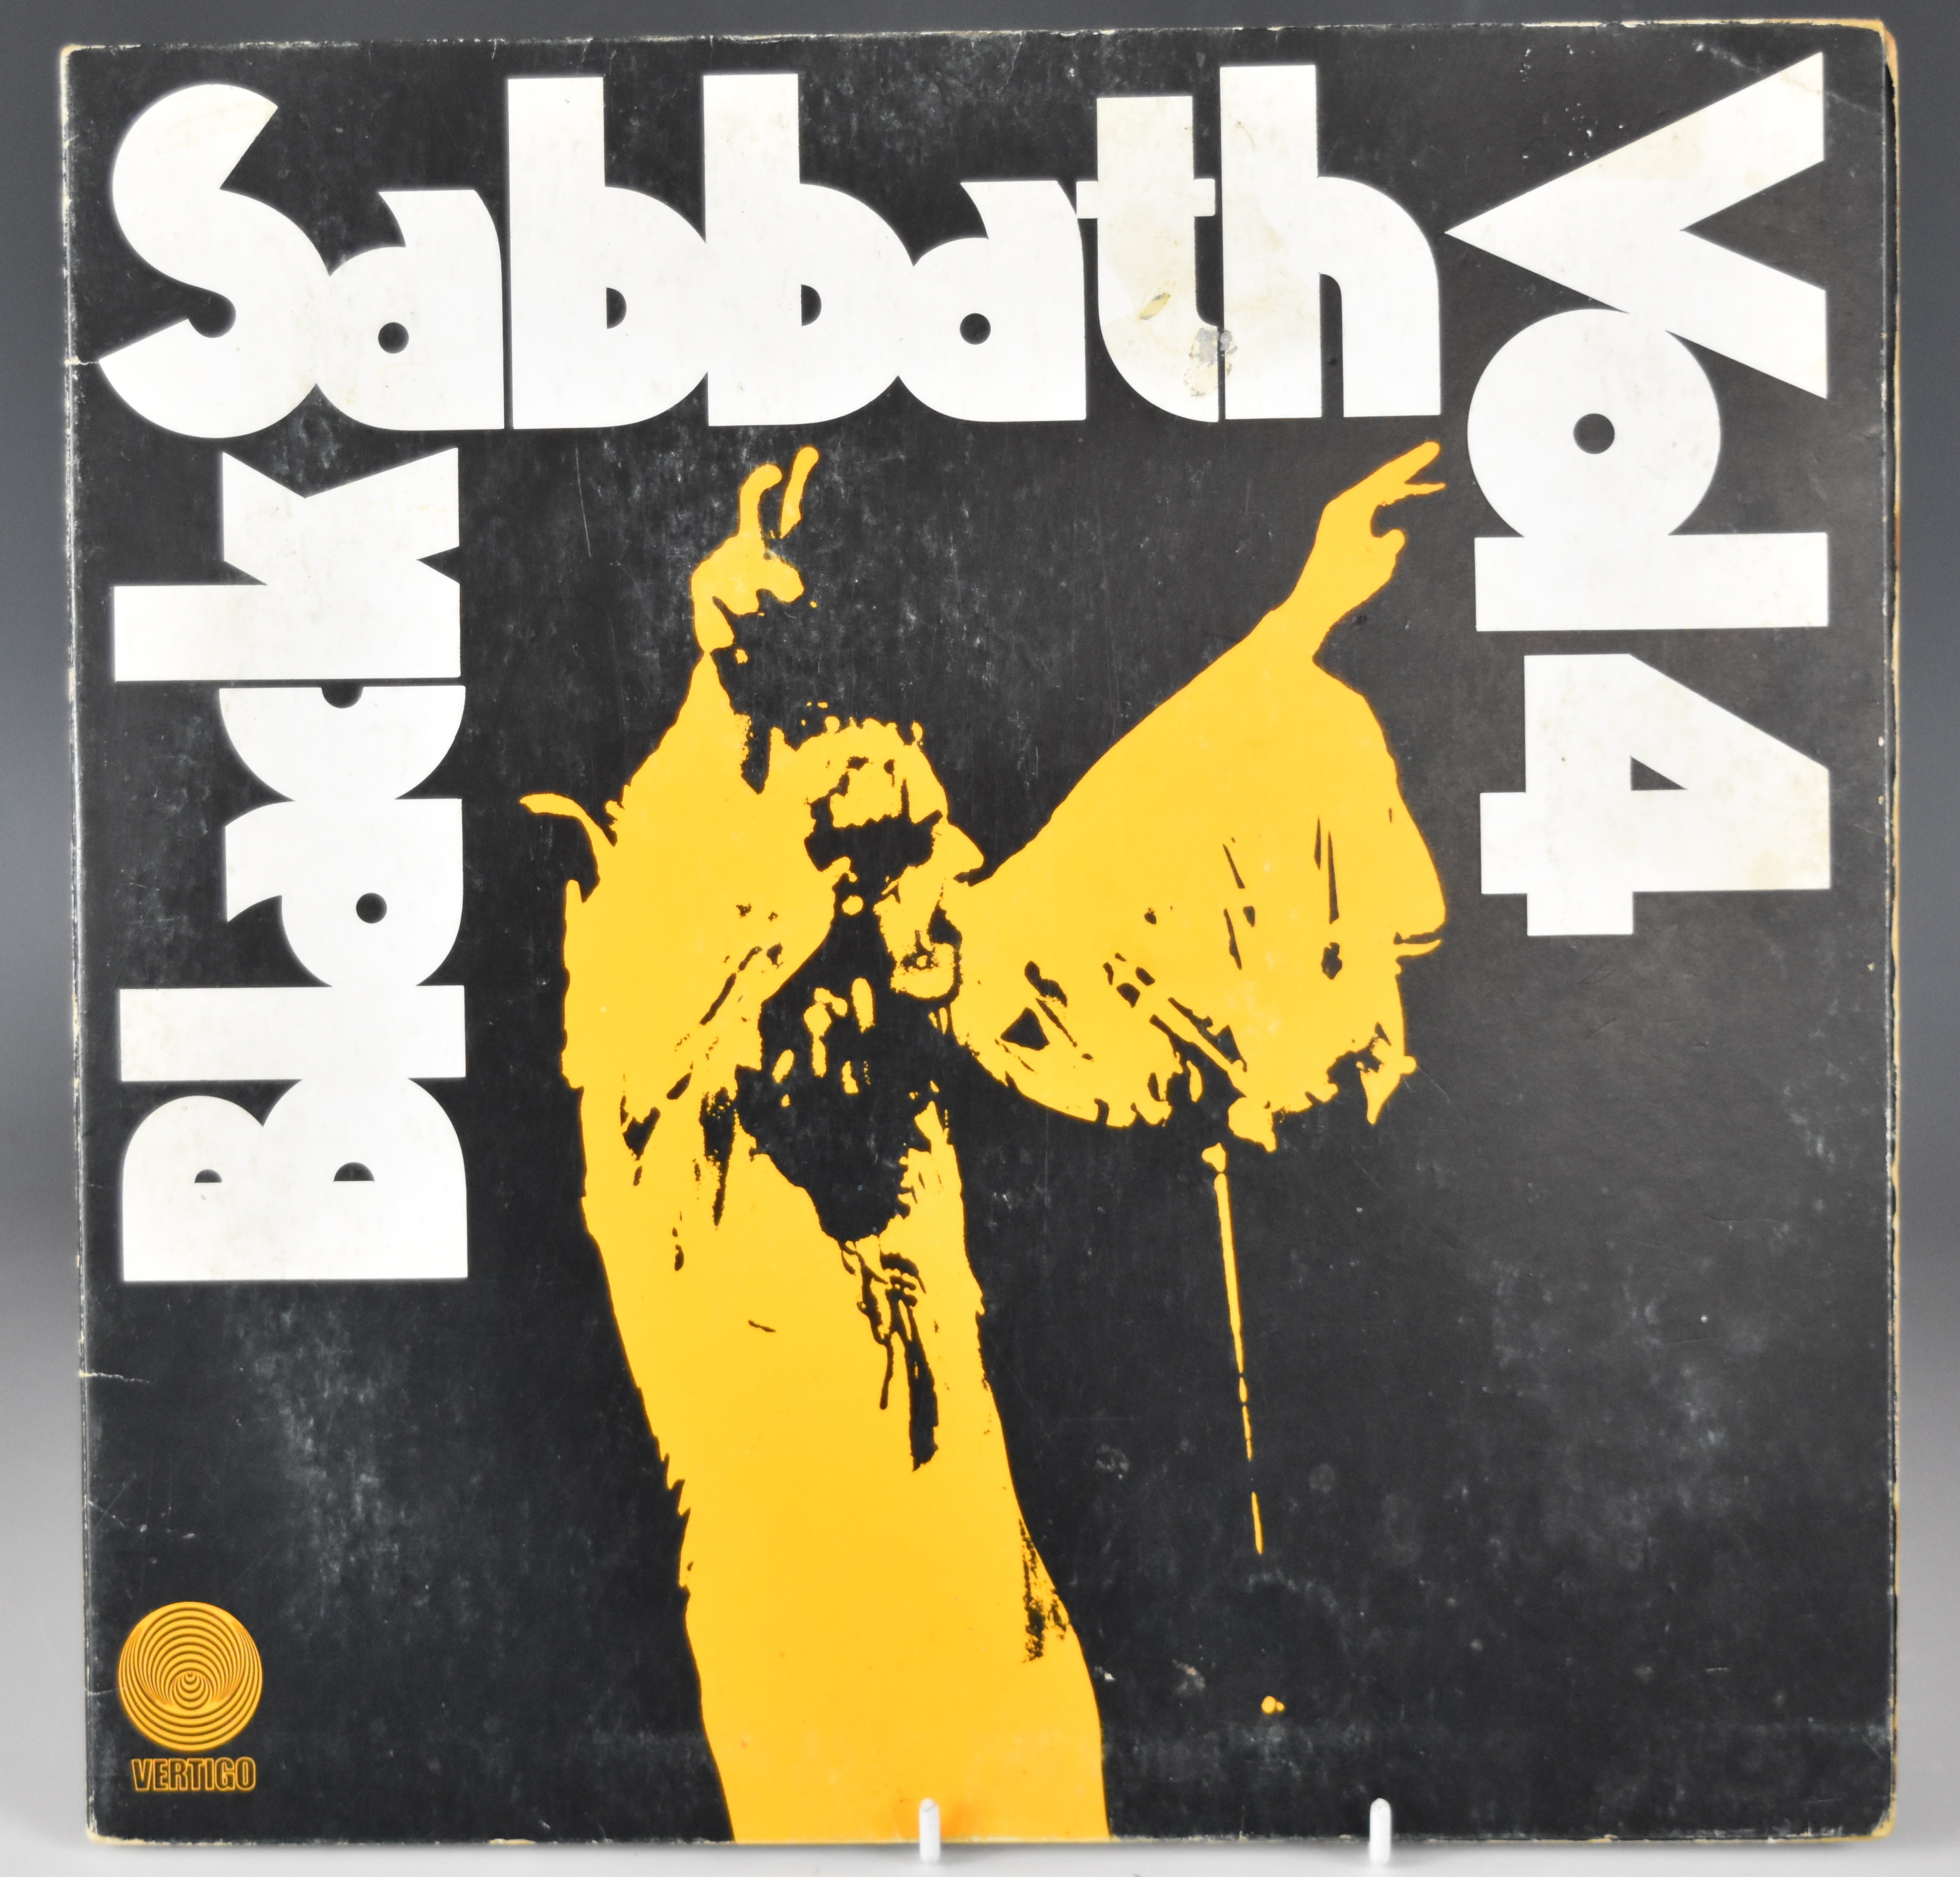 Black Sabbath - Volume 4 (6360-071) Vertigo Dutch pressing with black and white swirls, record